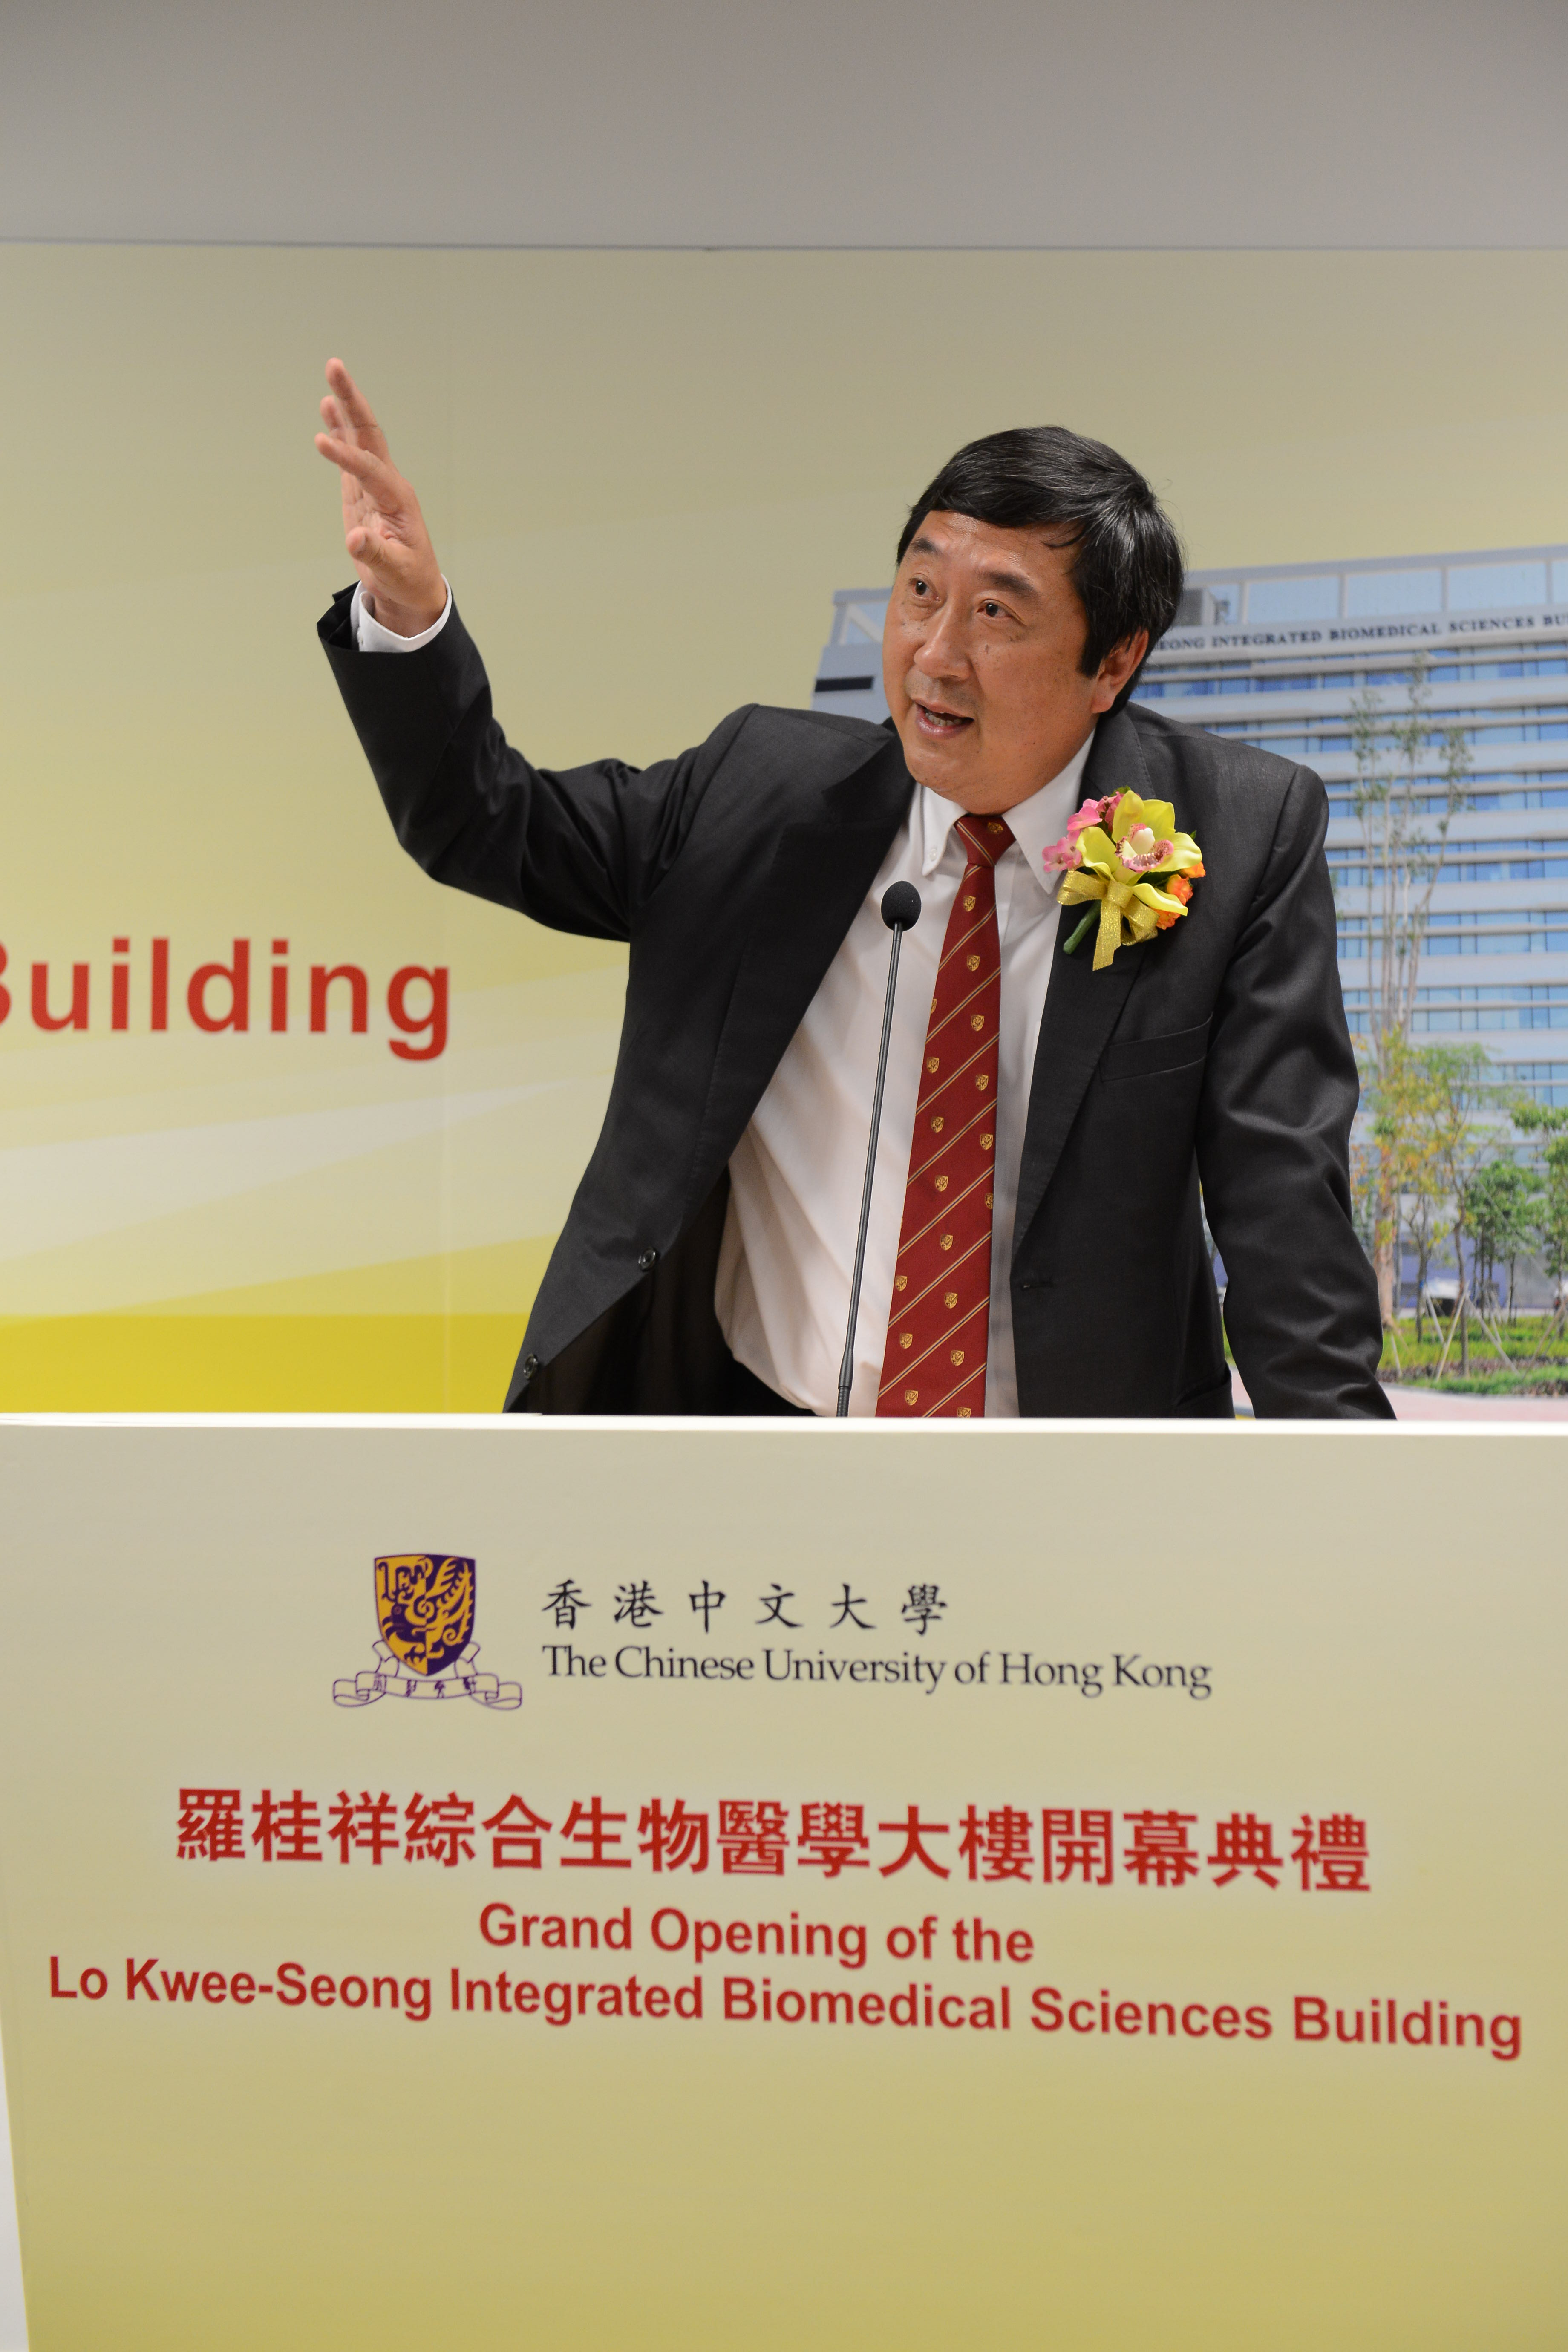 Speech by Prof. Joseph Sung.